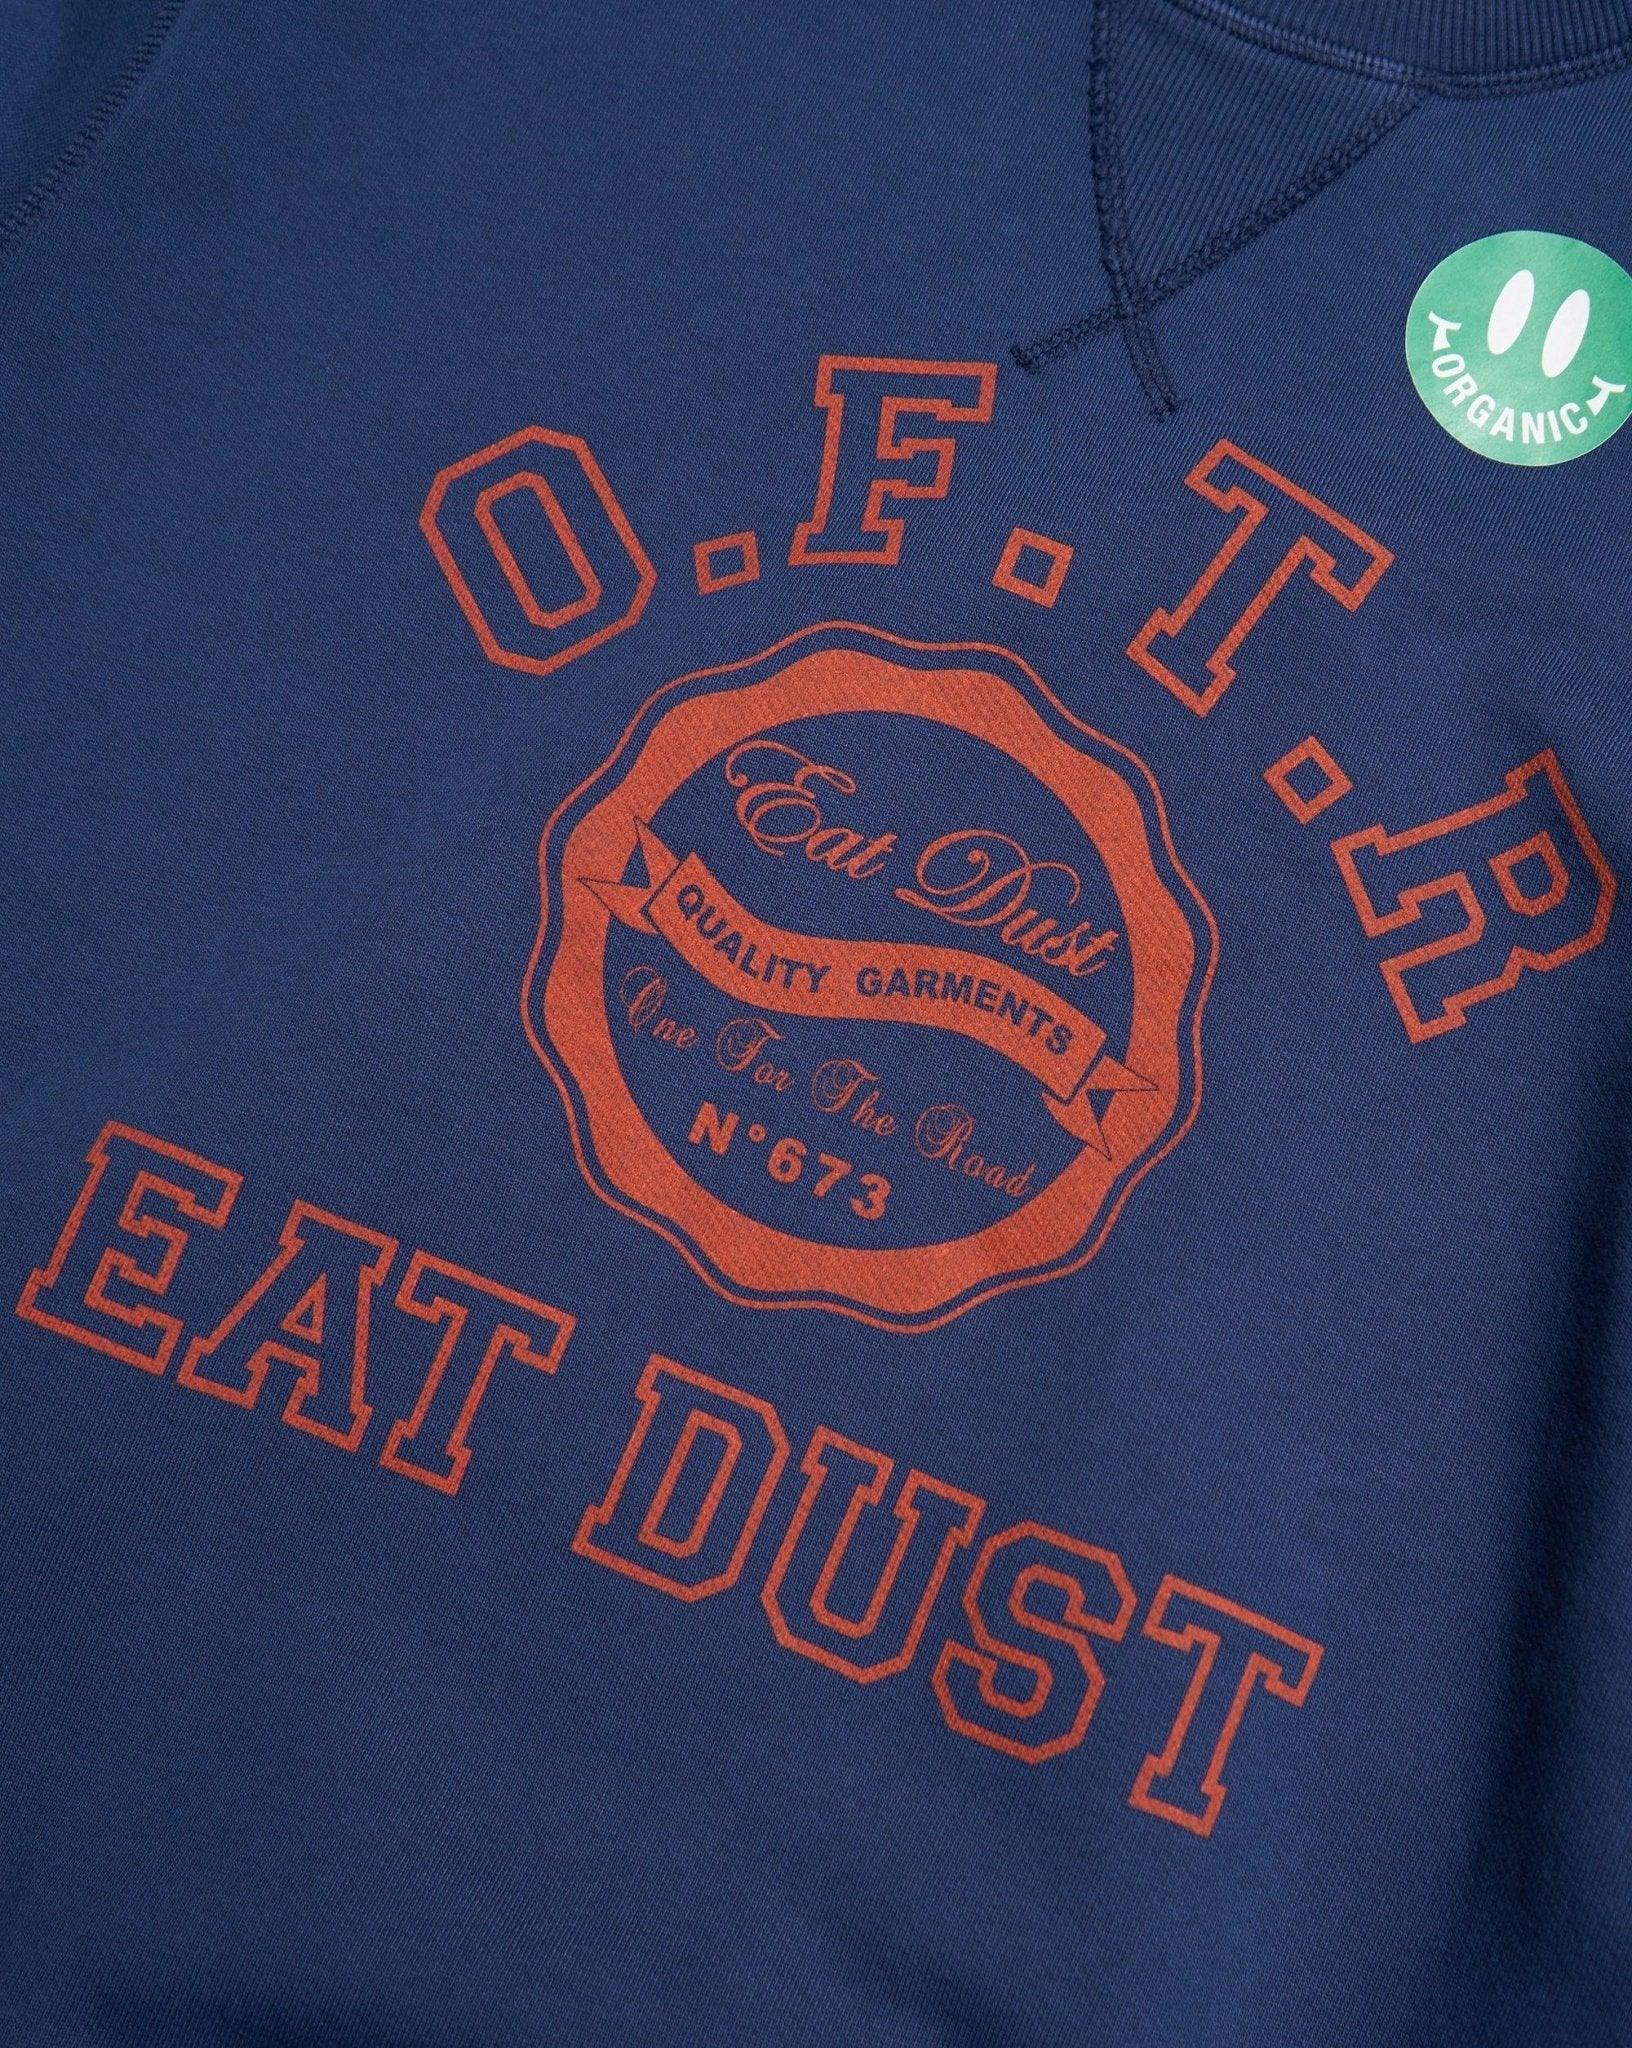 Eat Dust O.F.T.R Sweater - Indigo -Eat Dust - URAHARA